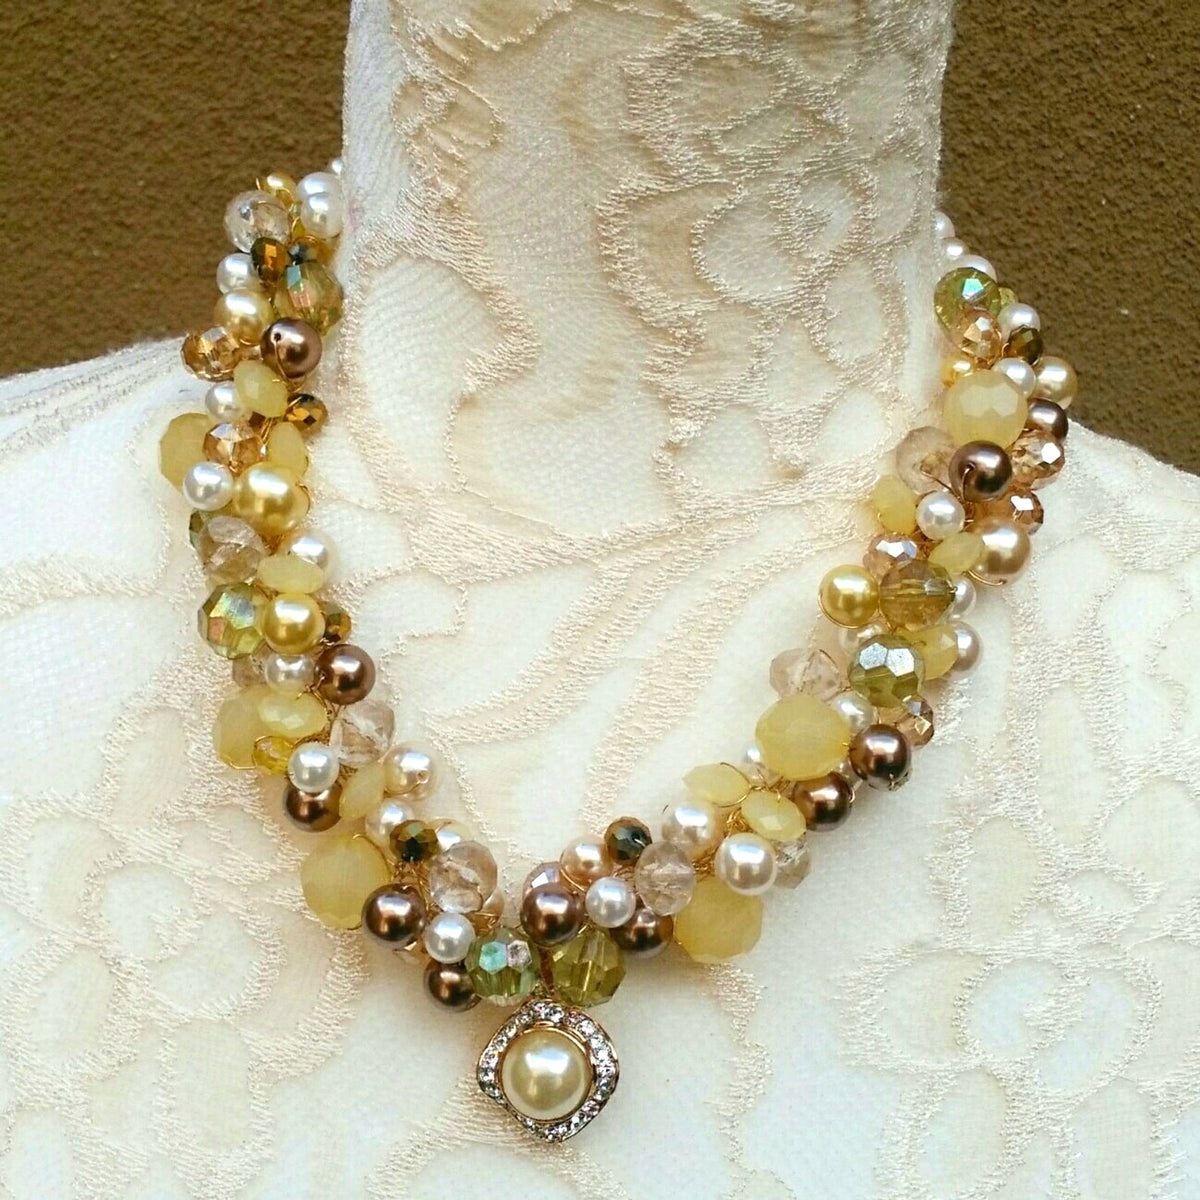 Vintage Pearl Pendant Bridal Statement Necklace - Unique Wedding Jewelry - Amazing Gift